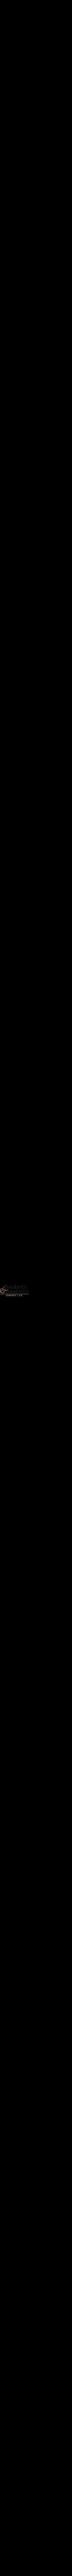 Bashein & Bashein Co LPA - Cleveland OH Lawyers